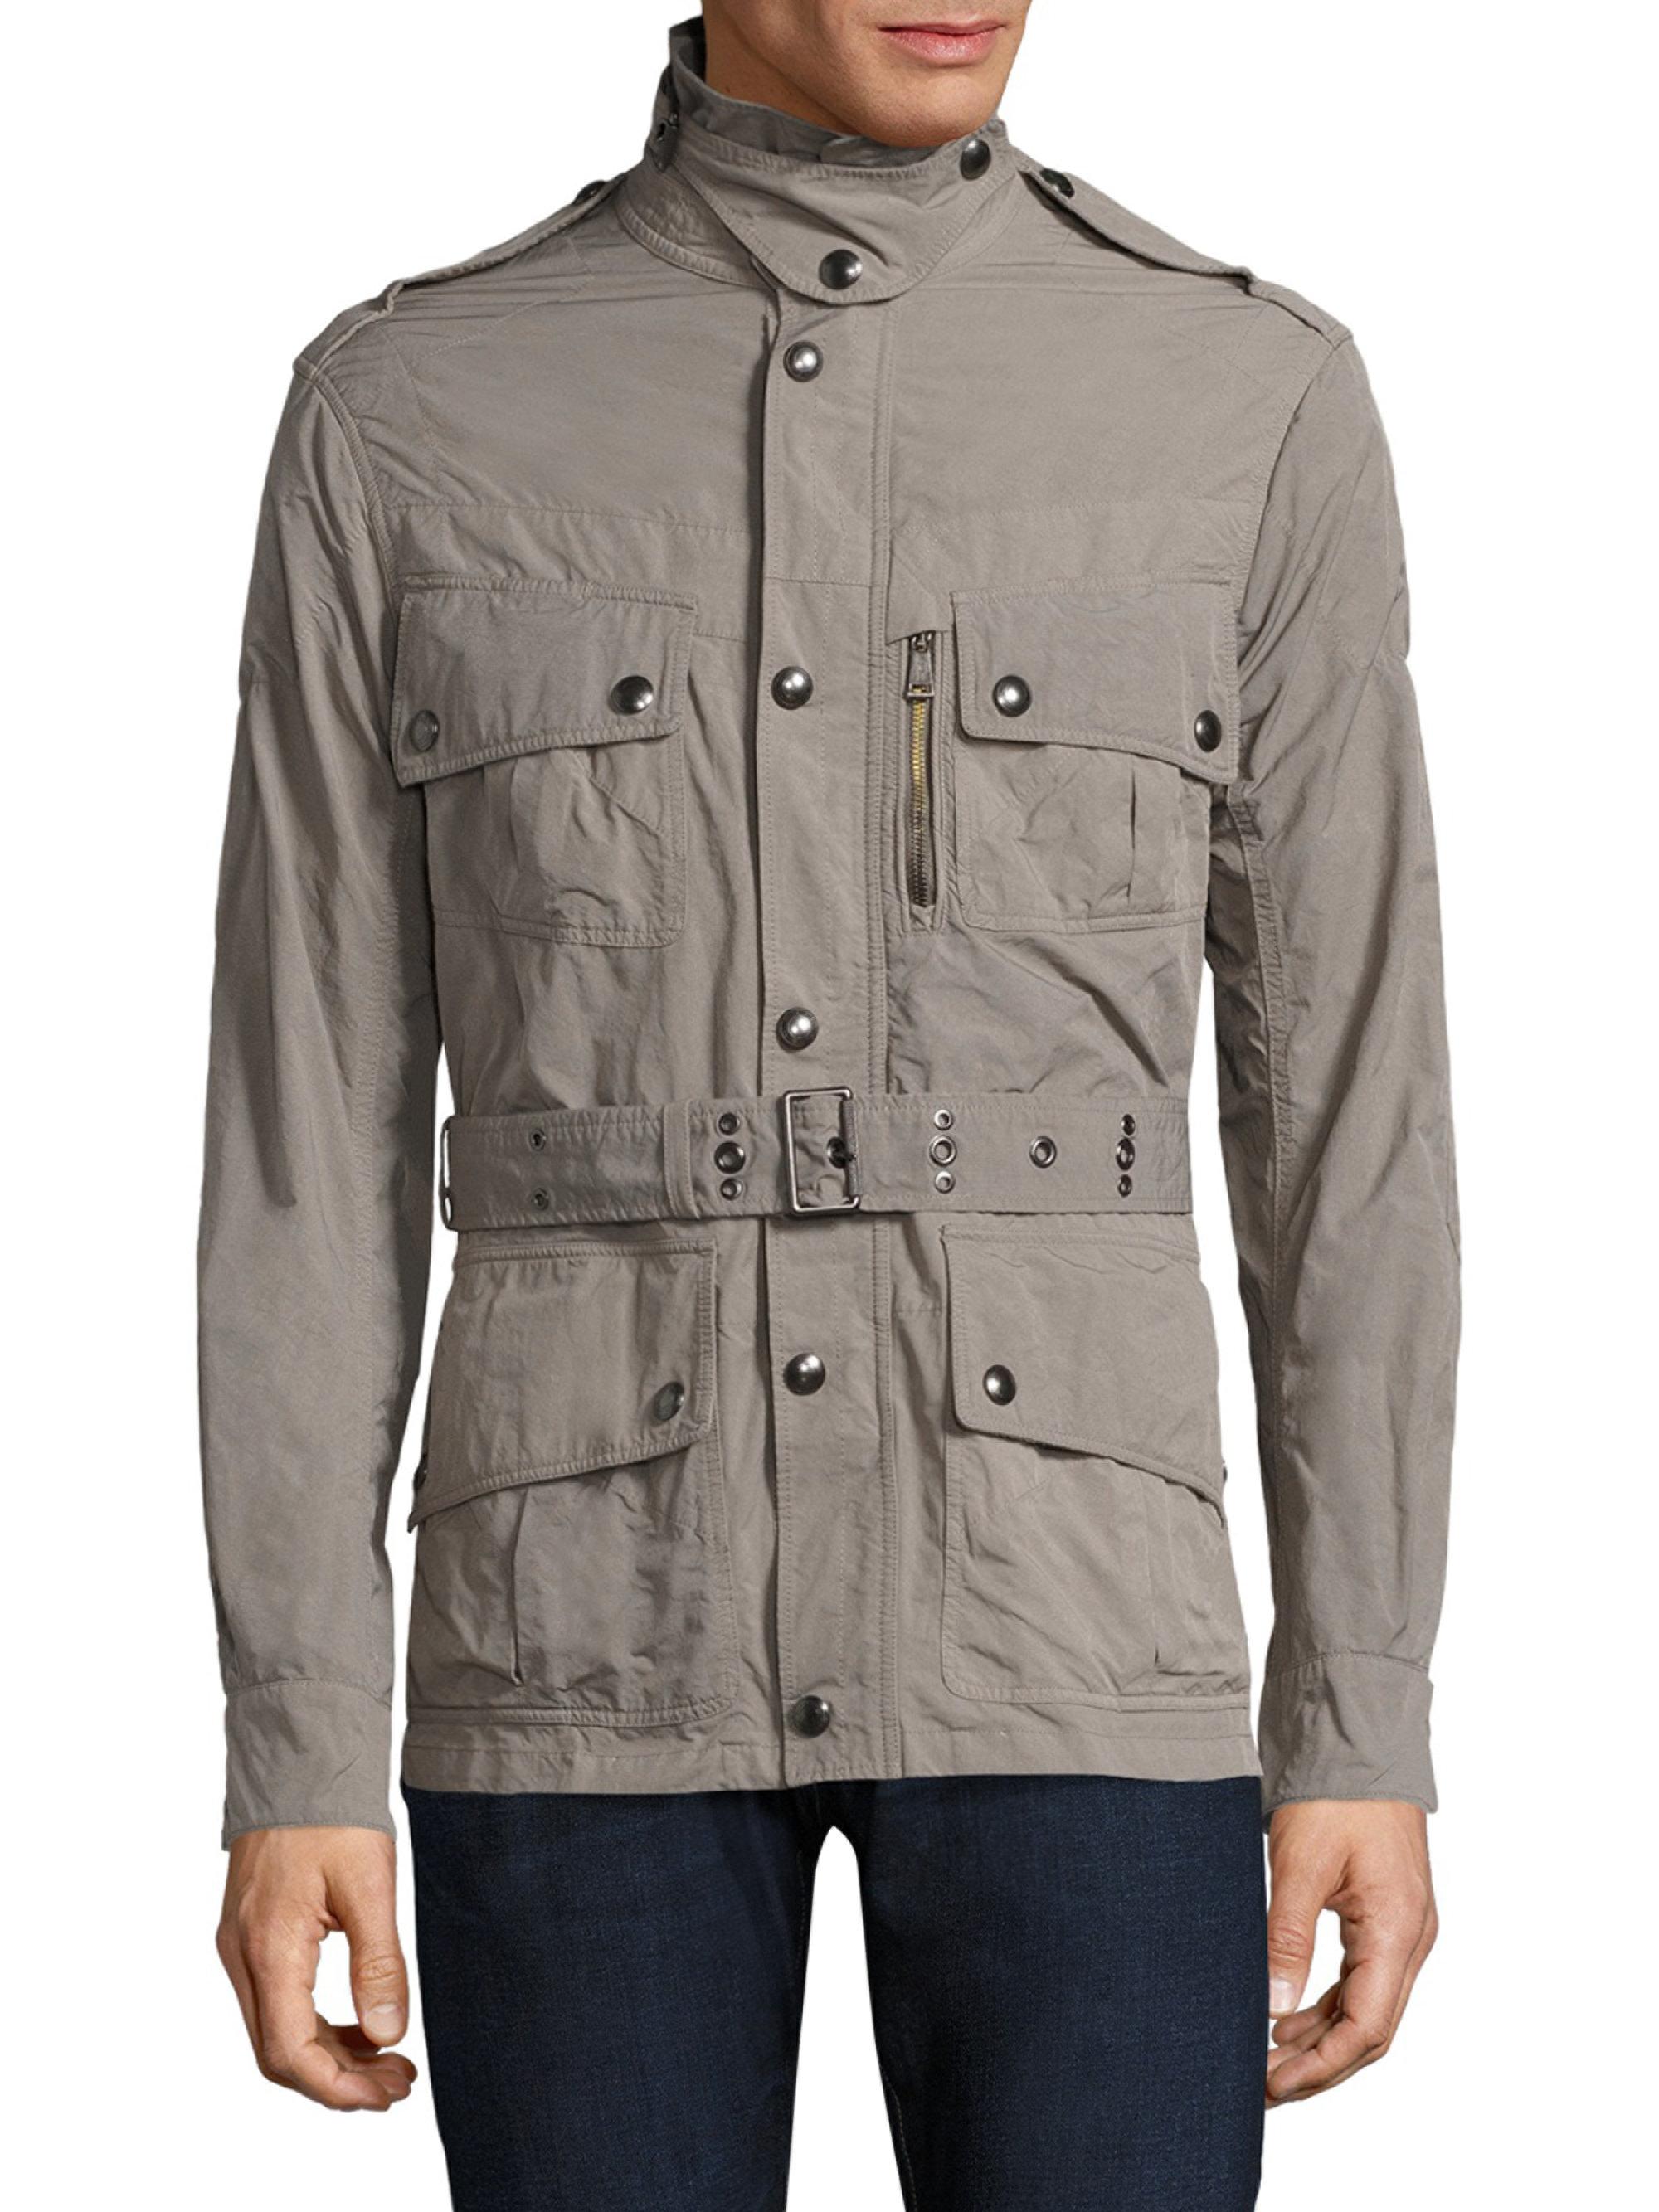 Polo Ralph Lauren Utility Jacket in Gray for Men - Lyst